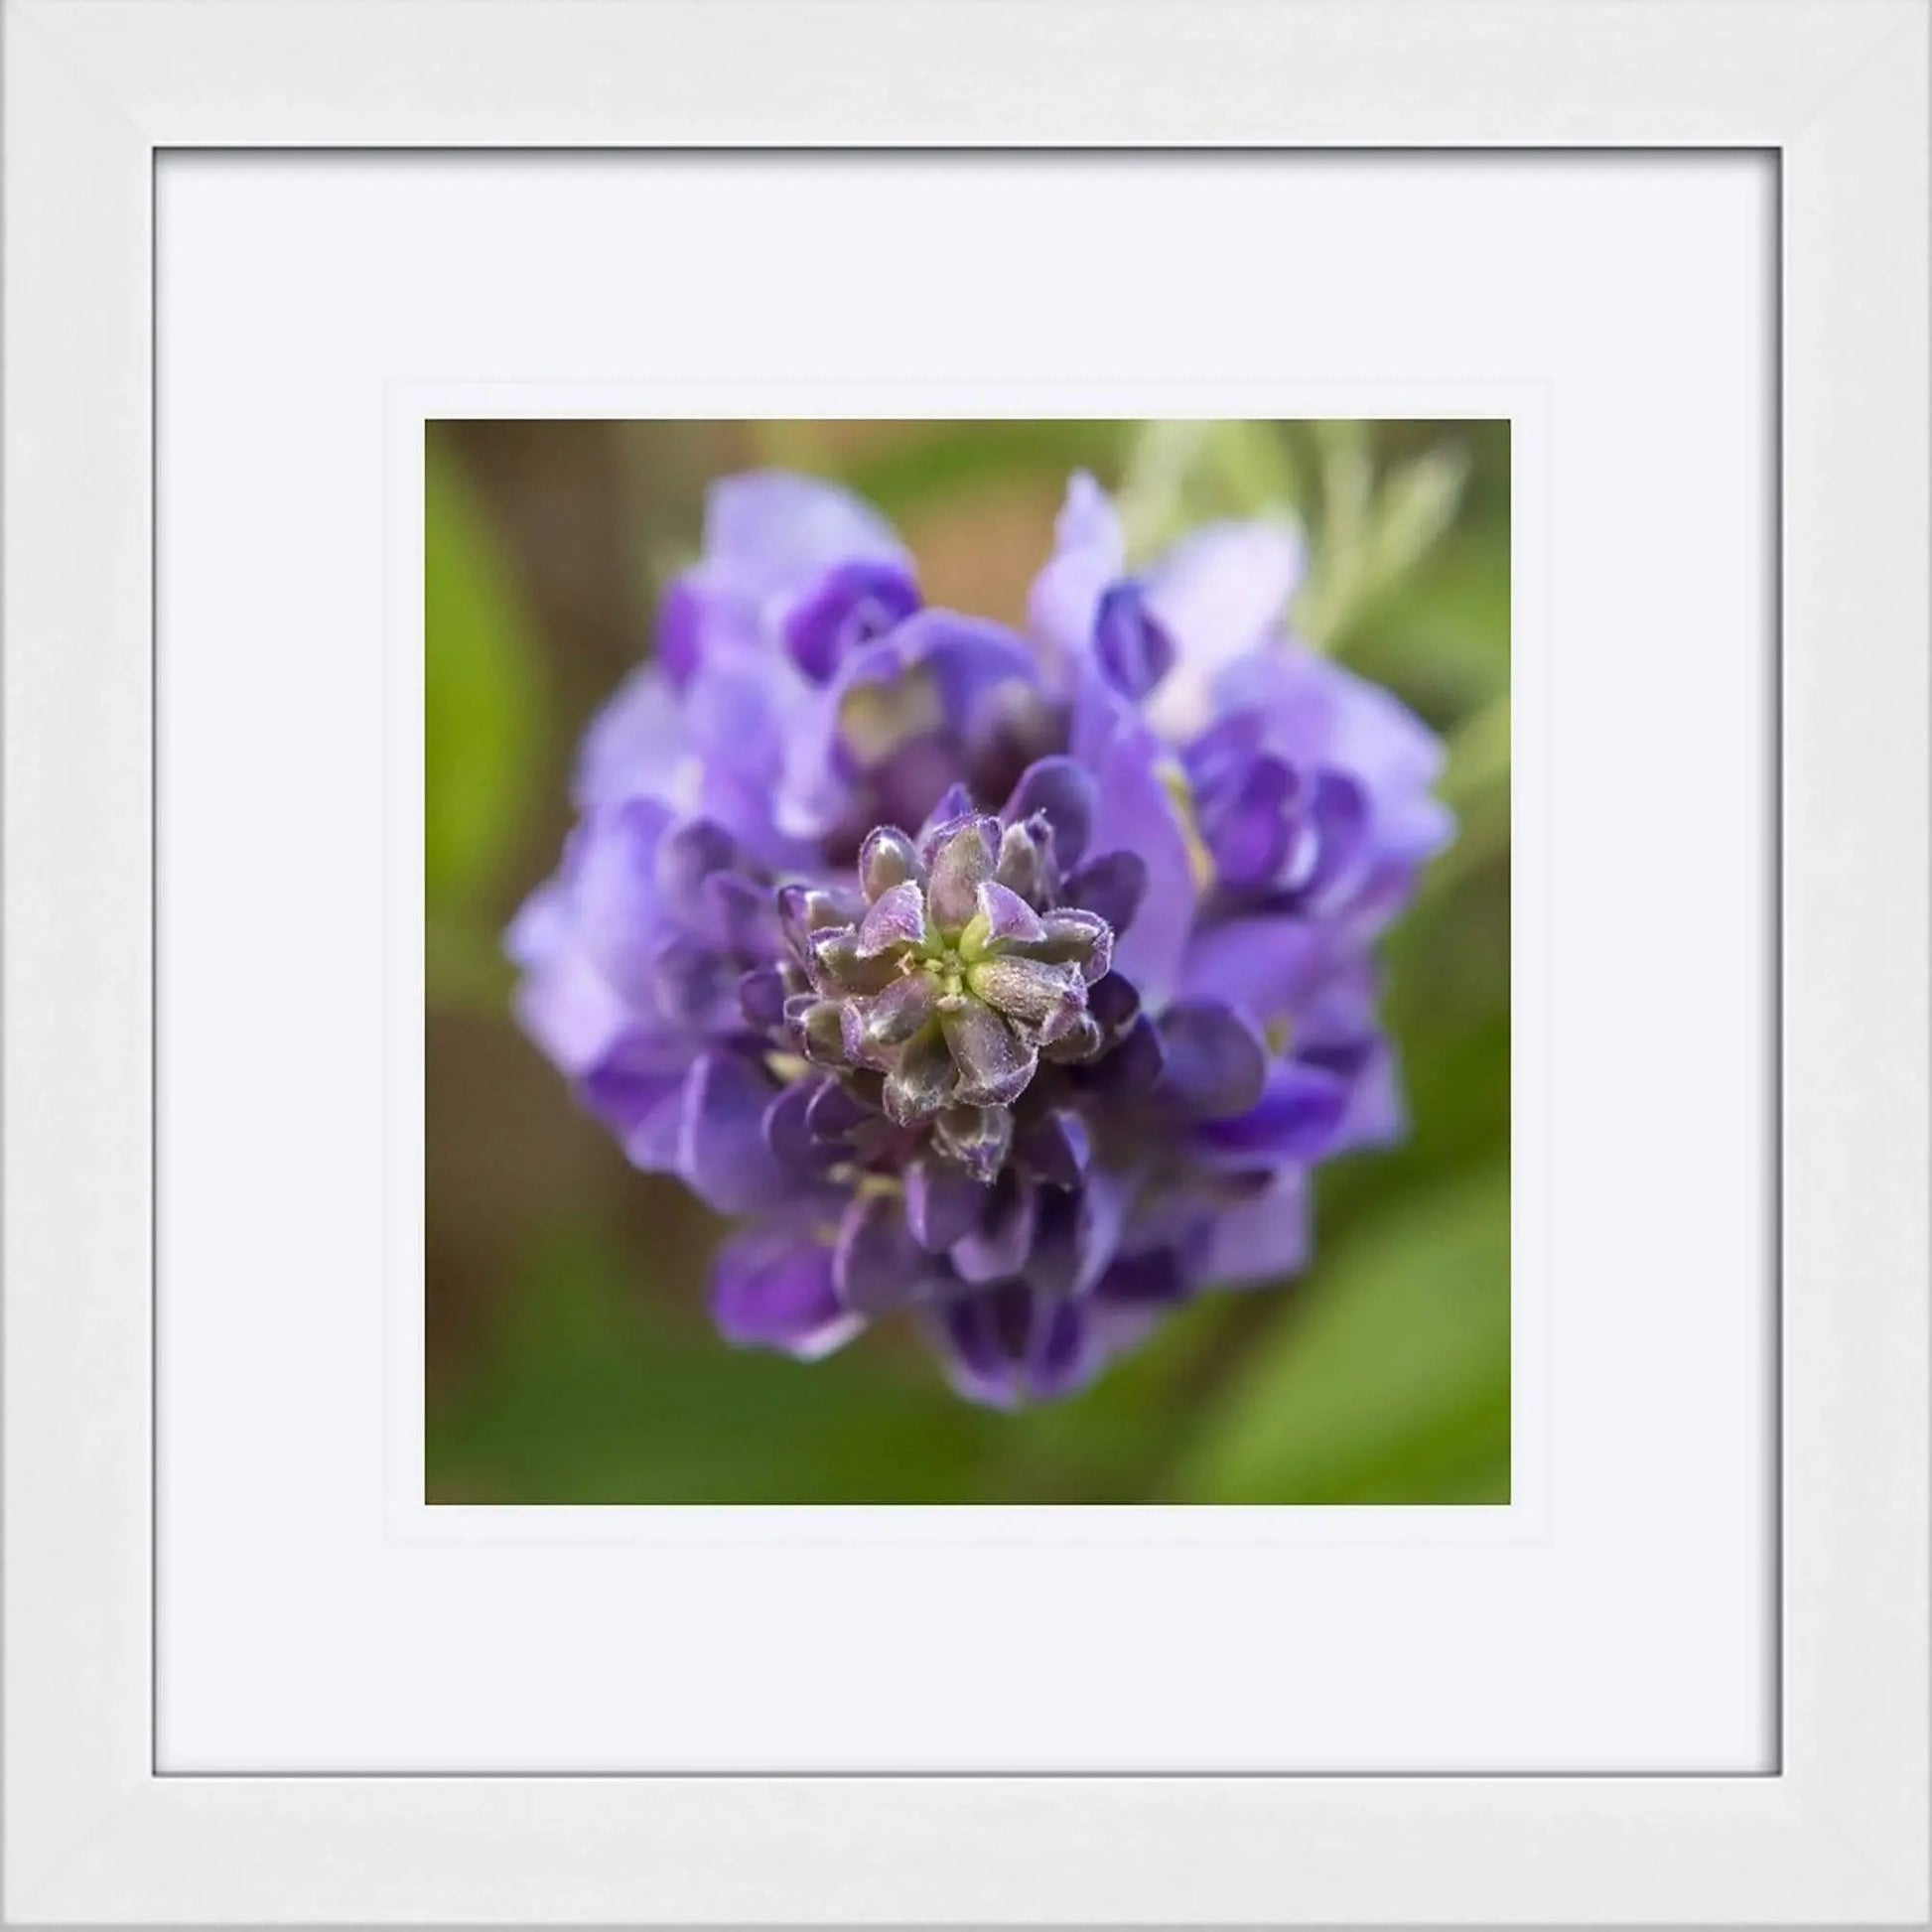 framed 12x12 purple wisteria flower macro by Lisa Blount